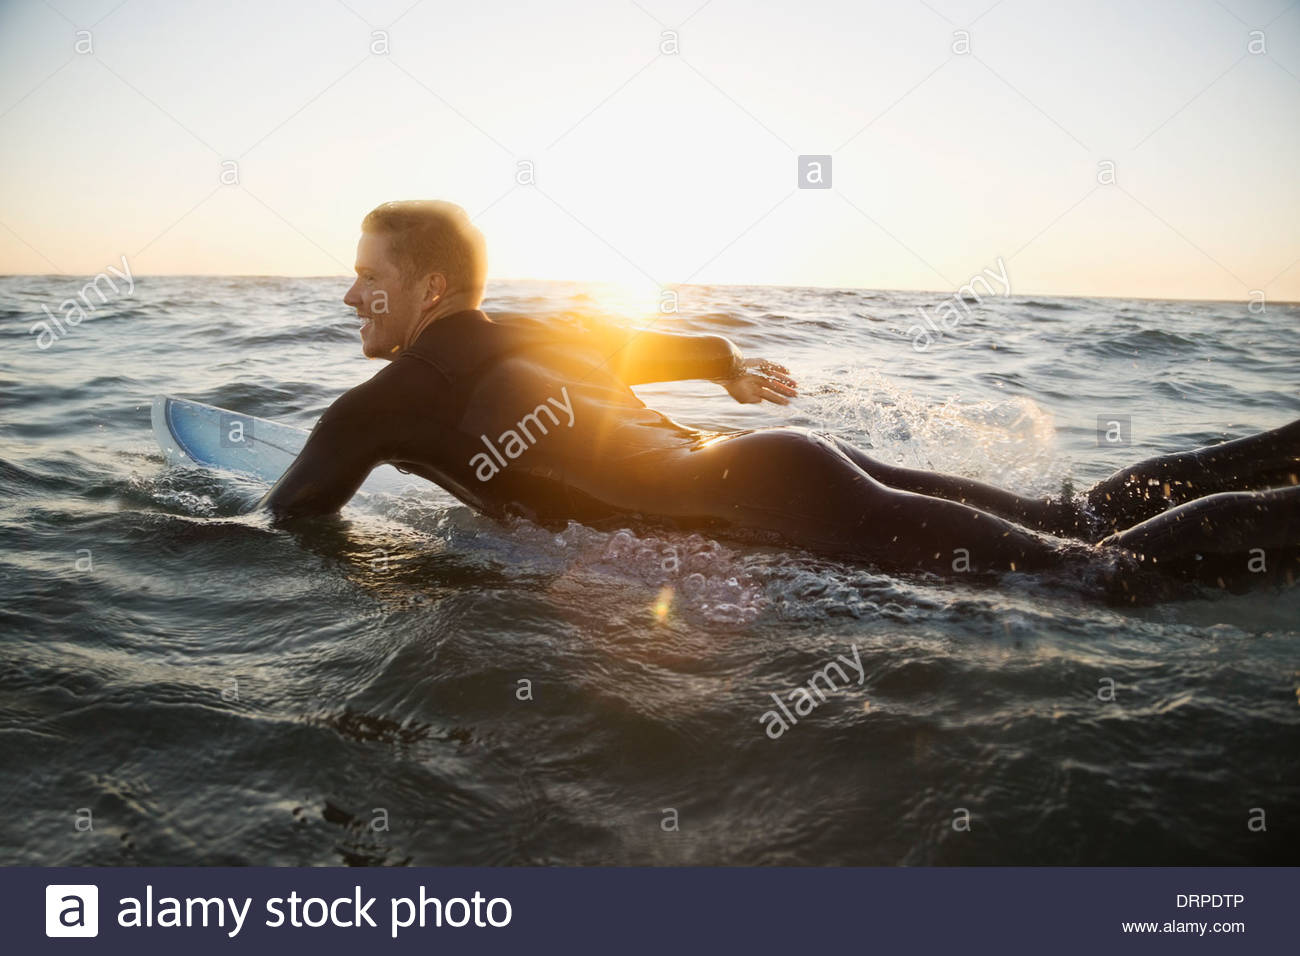 Man paddling on surfboard Banque D'Images